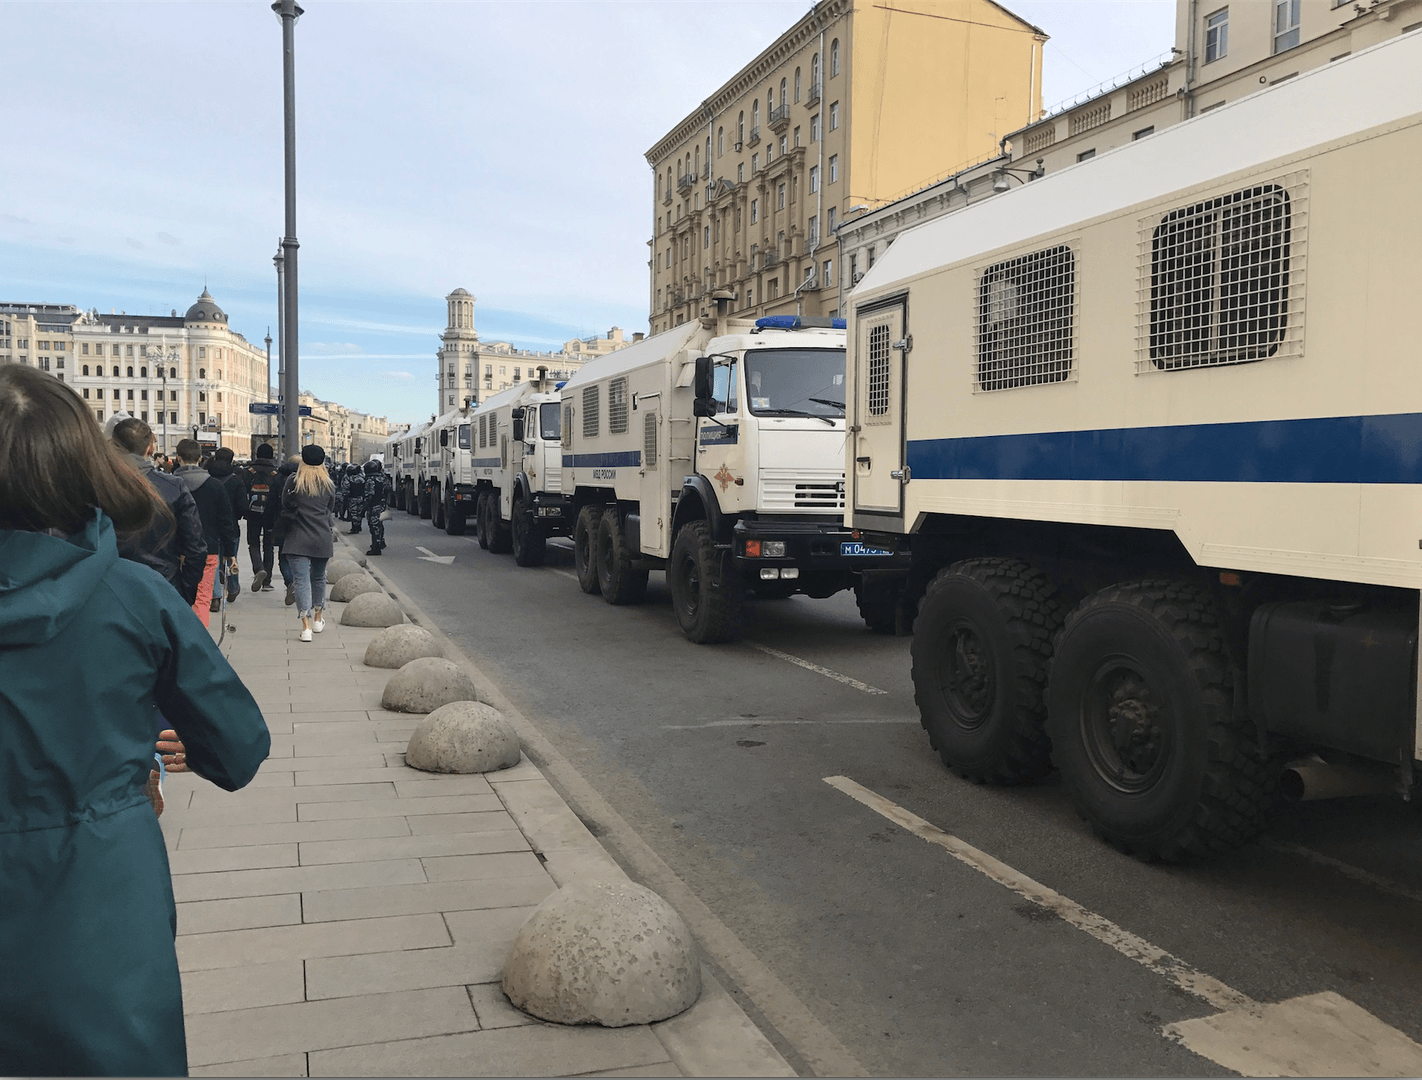 Police vans on Tverskaya Street, Marc 25, 2017.